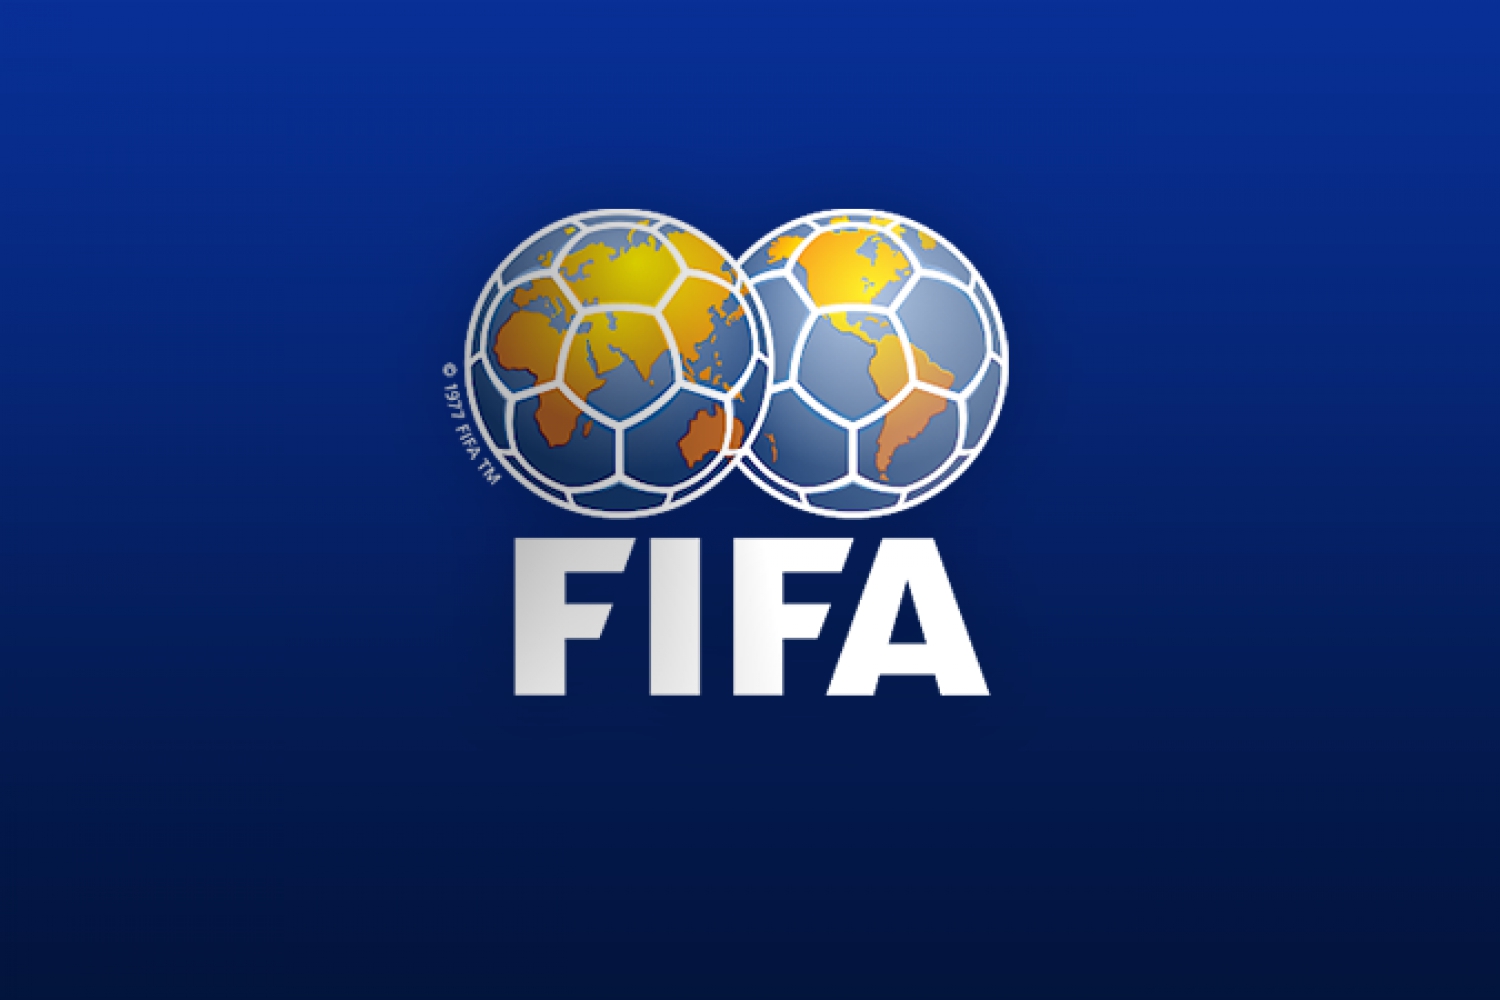 FIFA.com/twitter